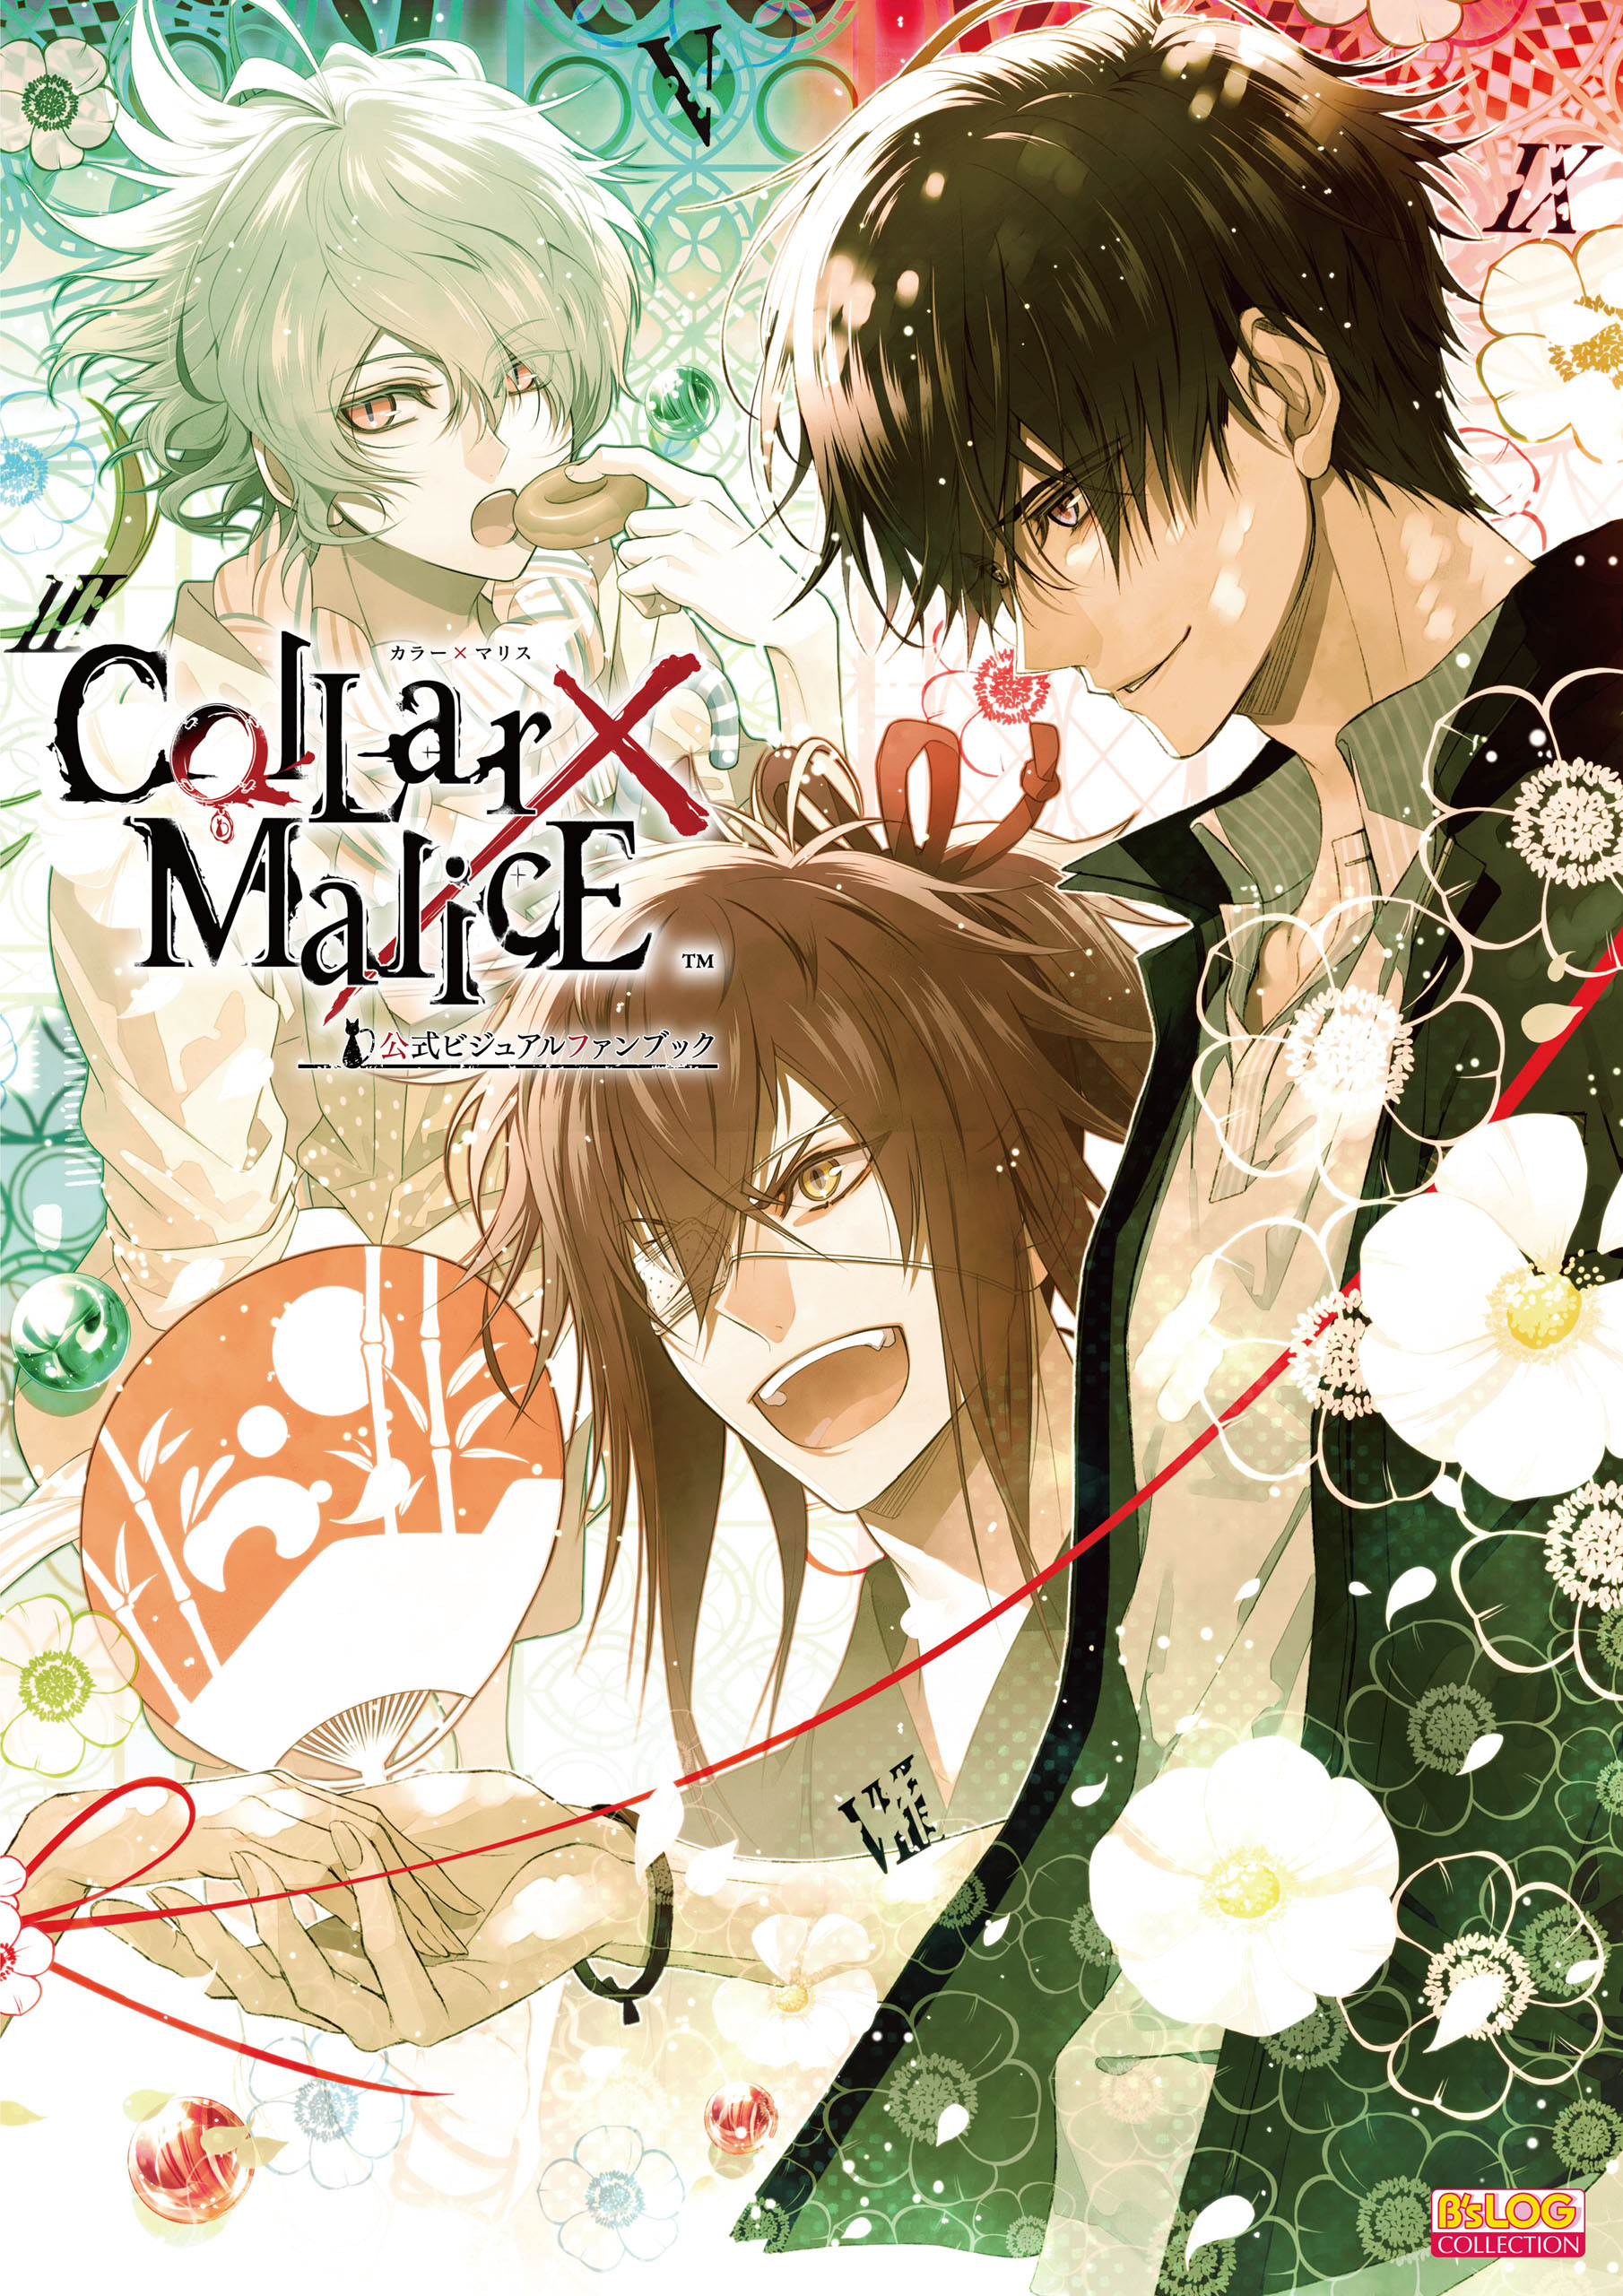 Collar×Malice 公式ビジュアルファンブック - B's-LOG編集部 - 漫画 